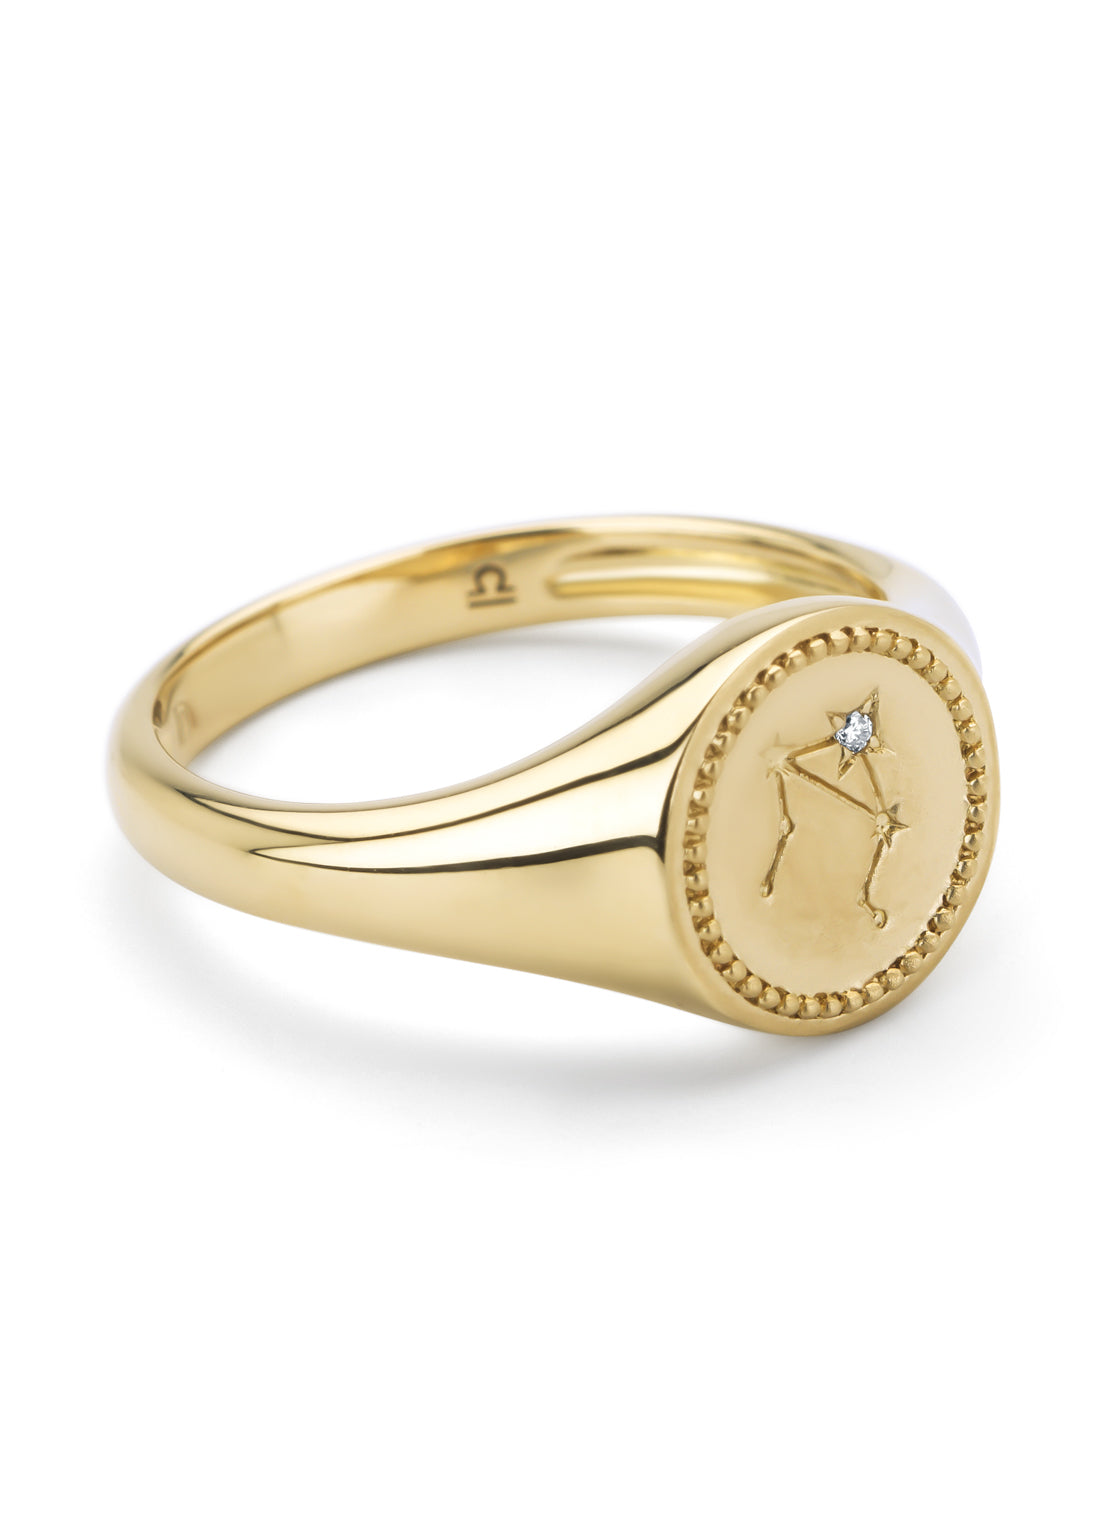 Yellow gold signet ring, zodiac-libra (scales)